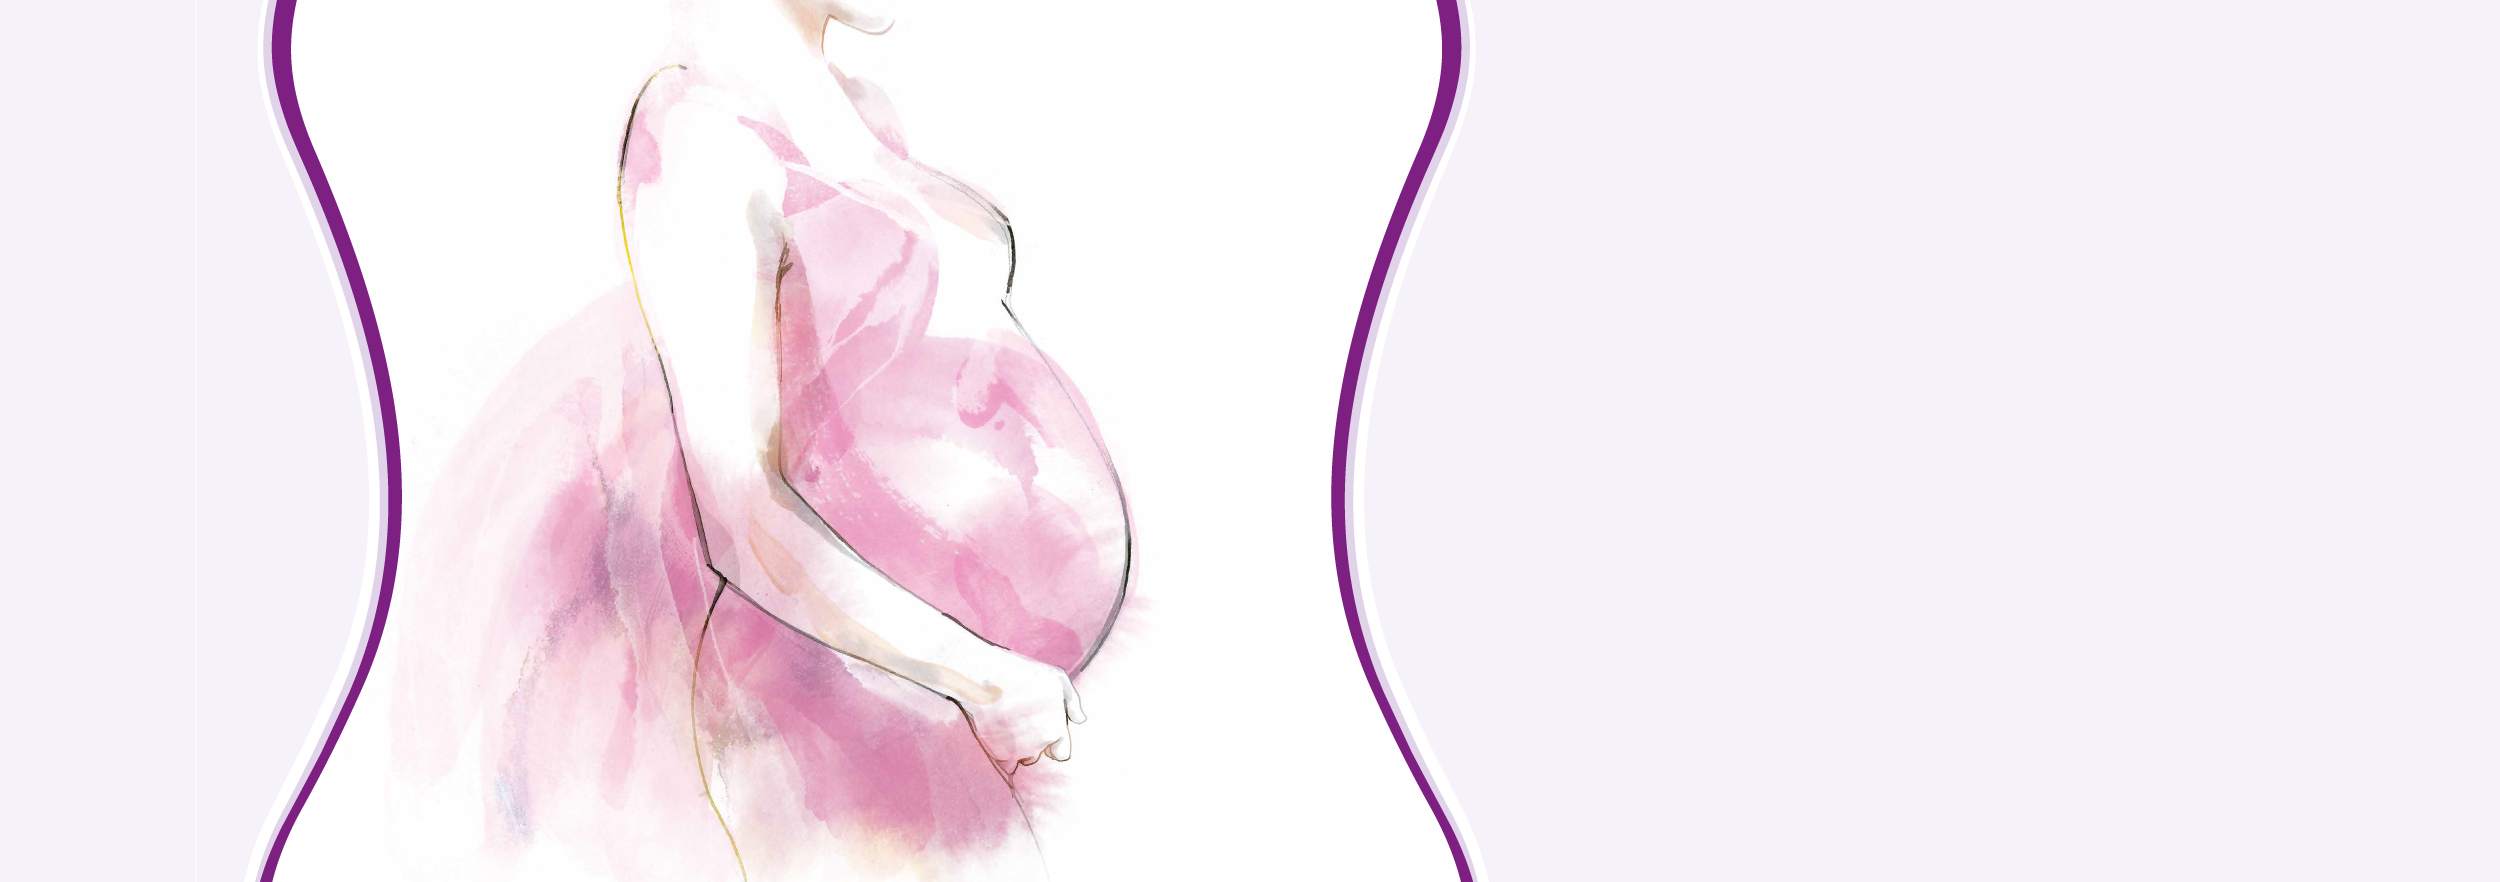 obstetrics banner image